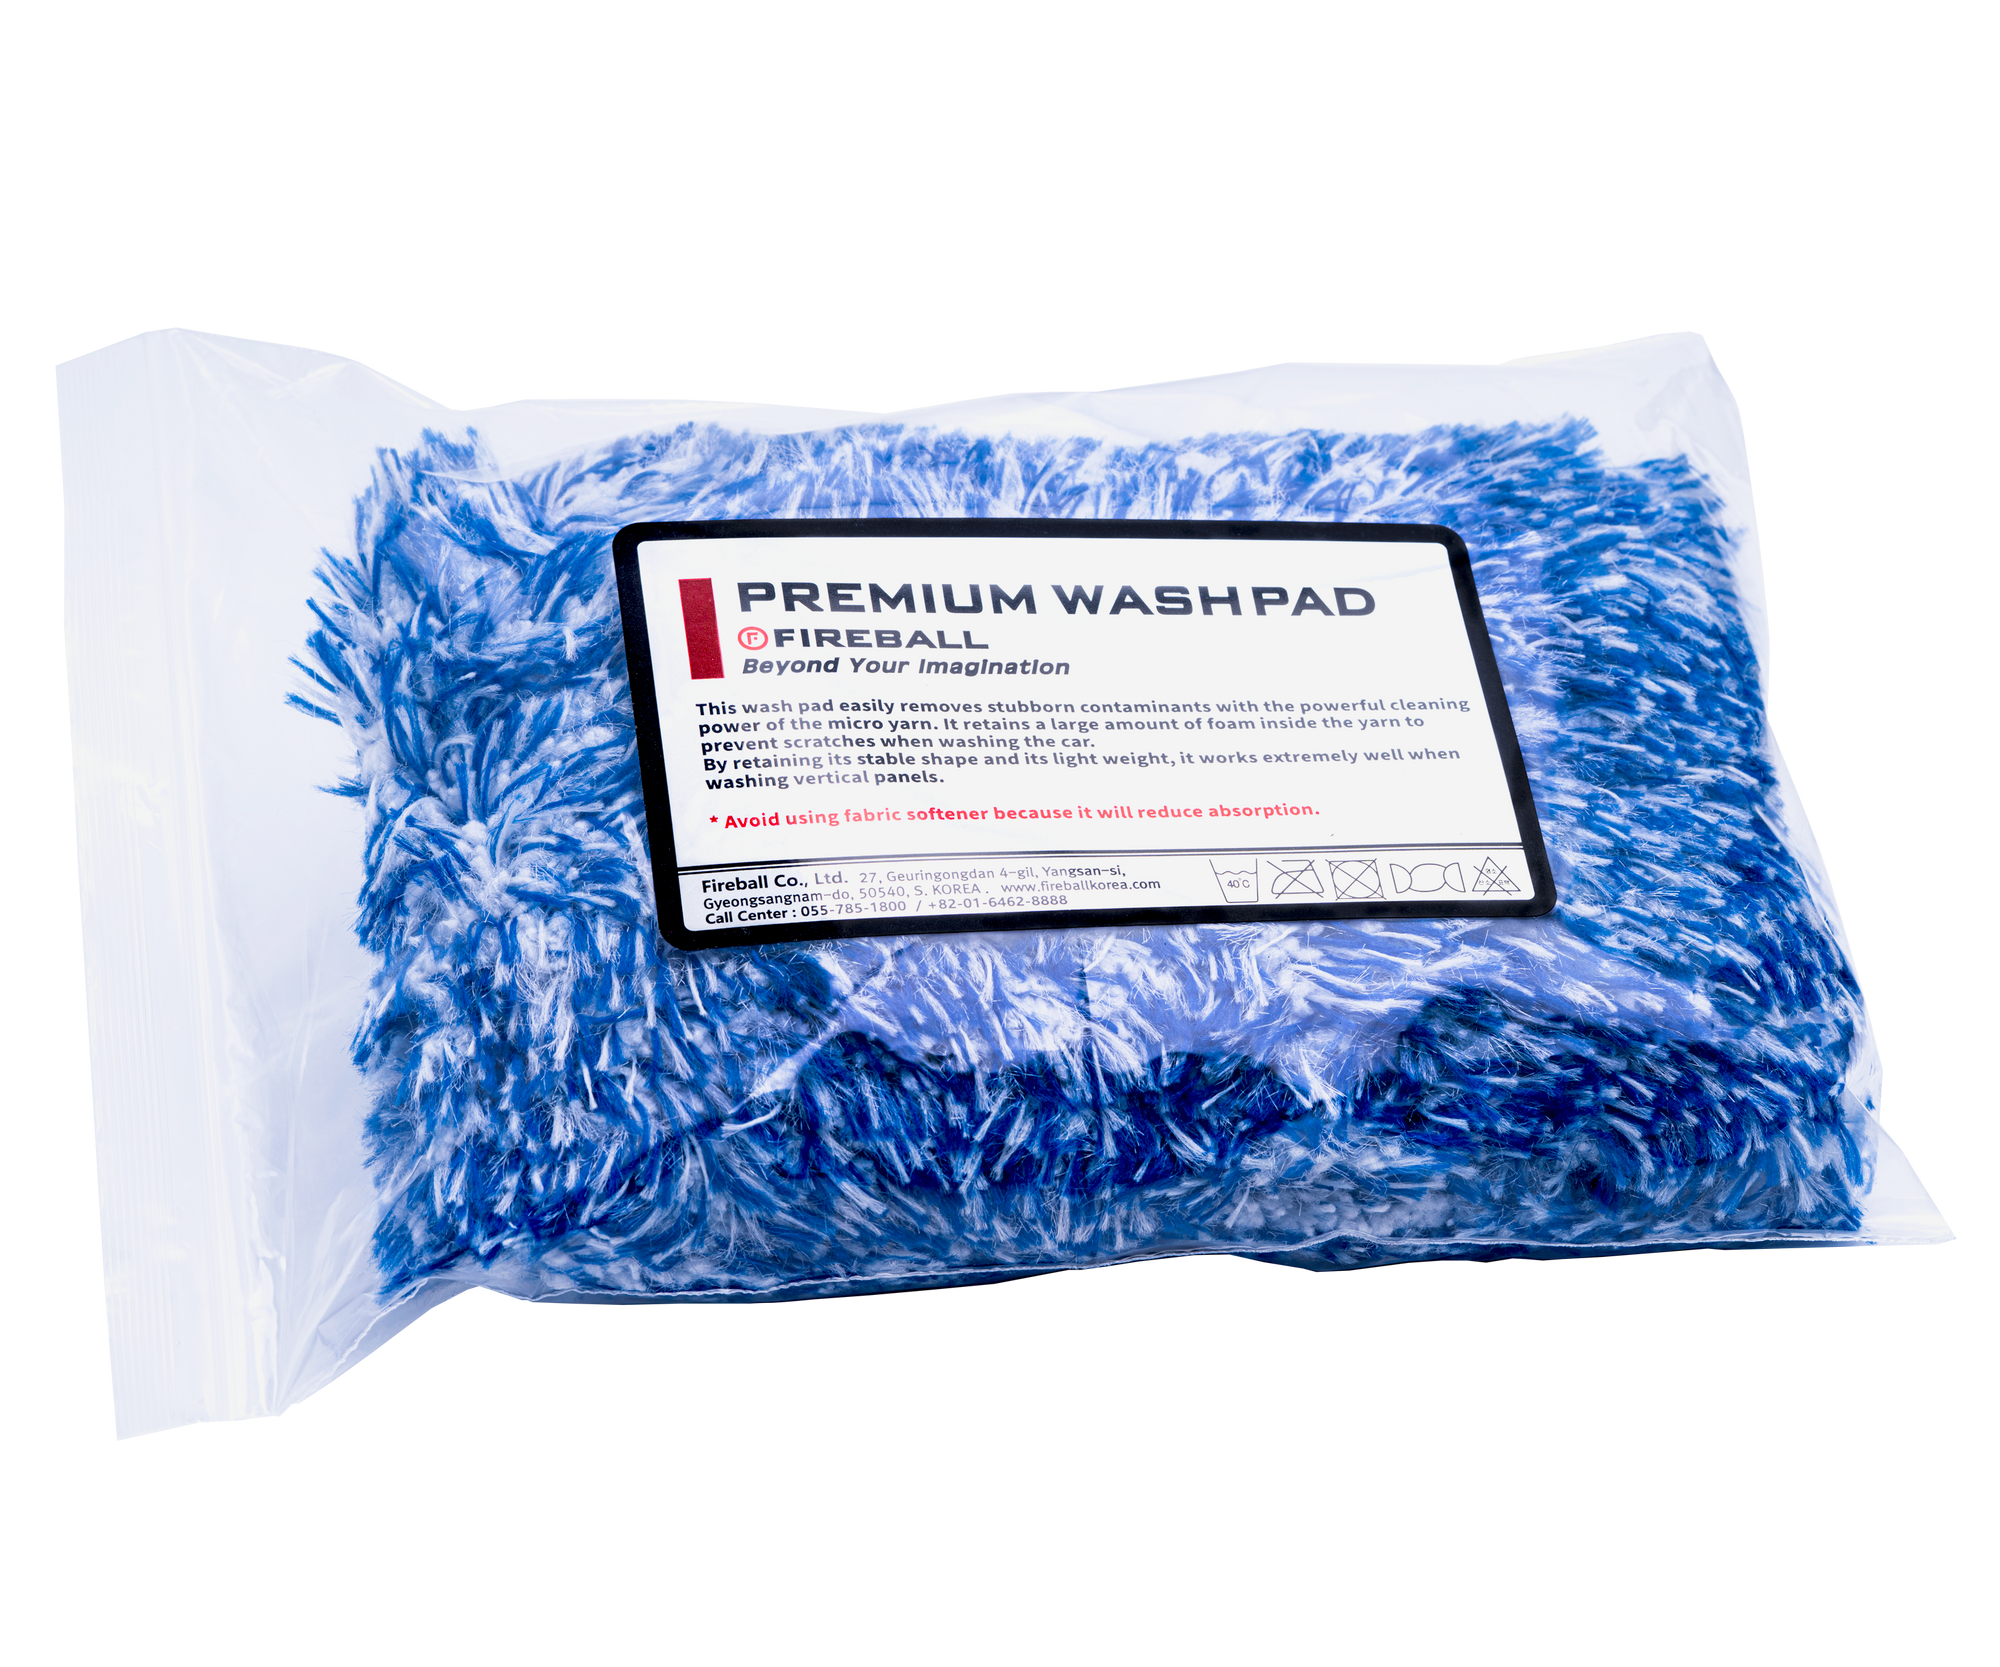 Fireball Premium Wash Pad